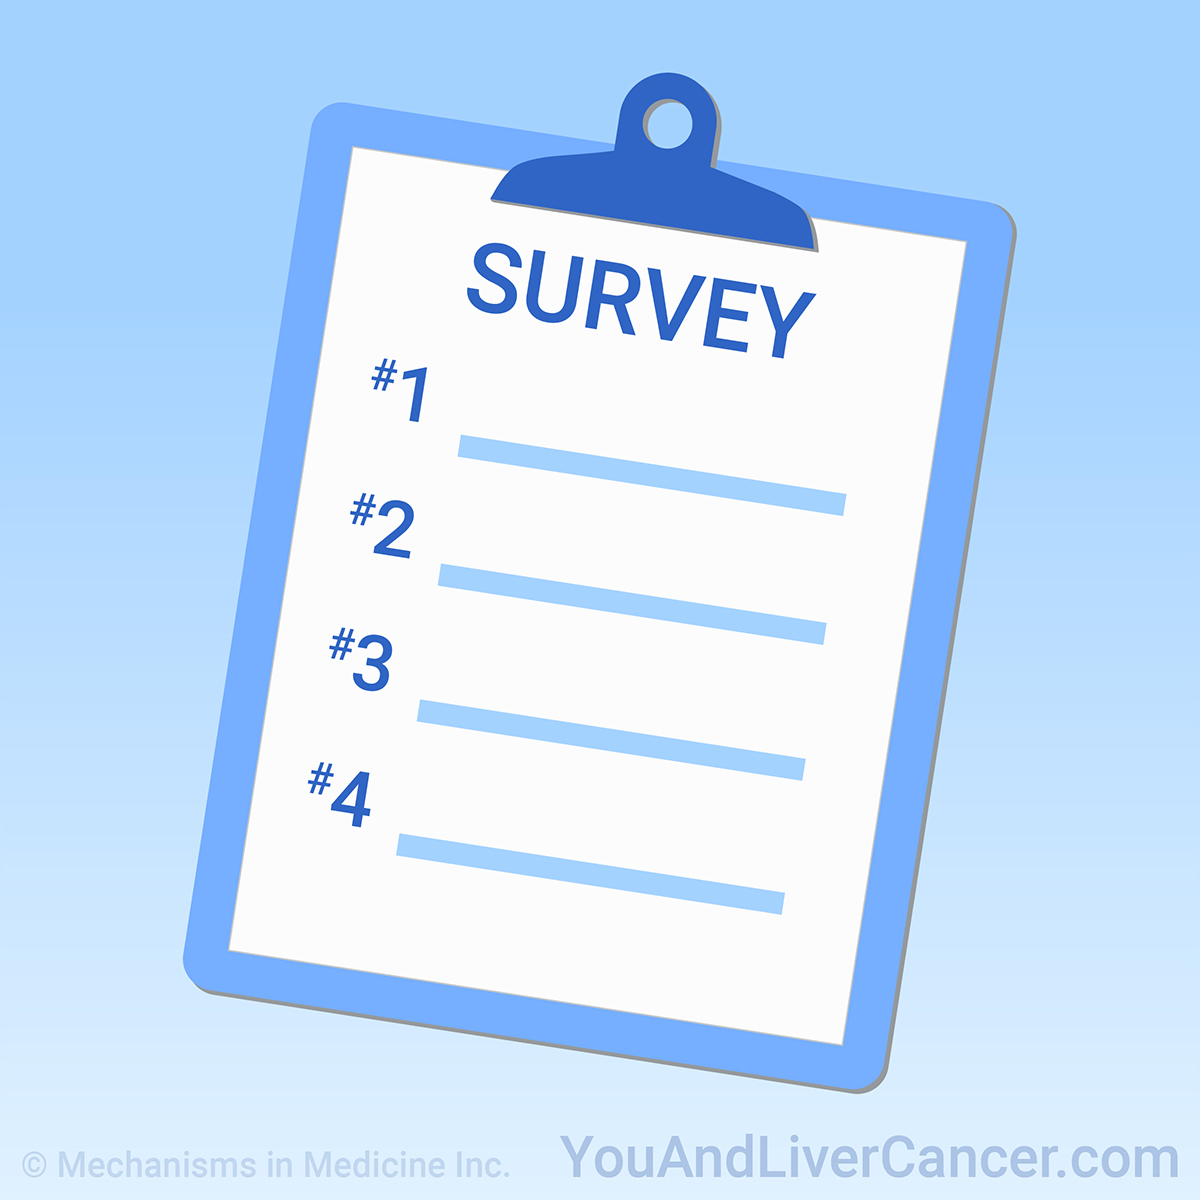 Take Our HIPAA-Compliant Survey